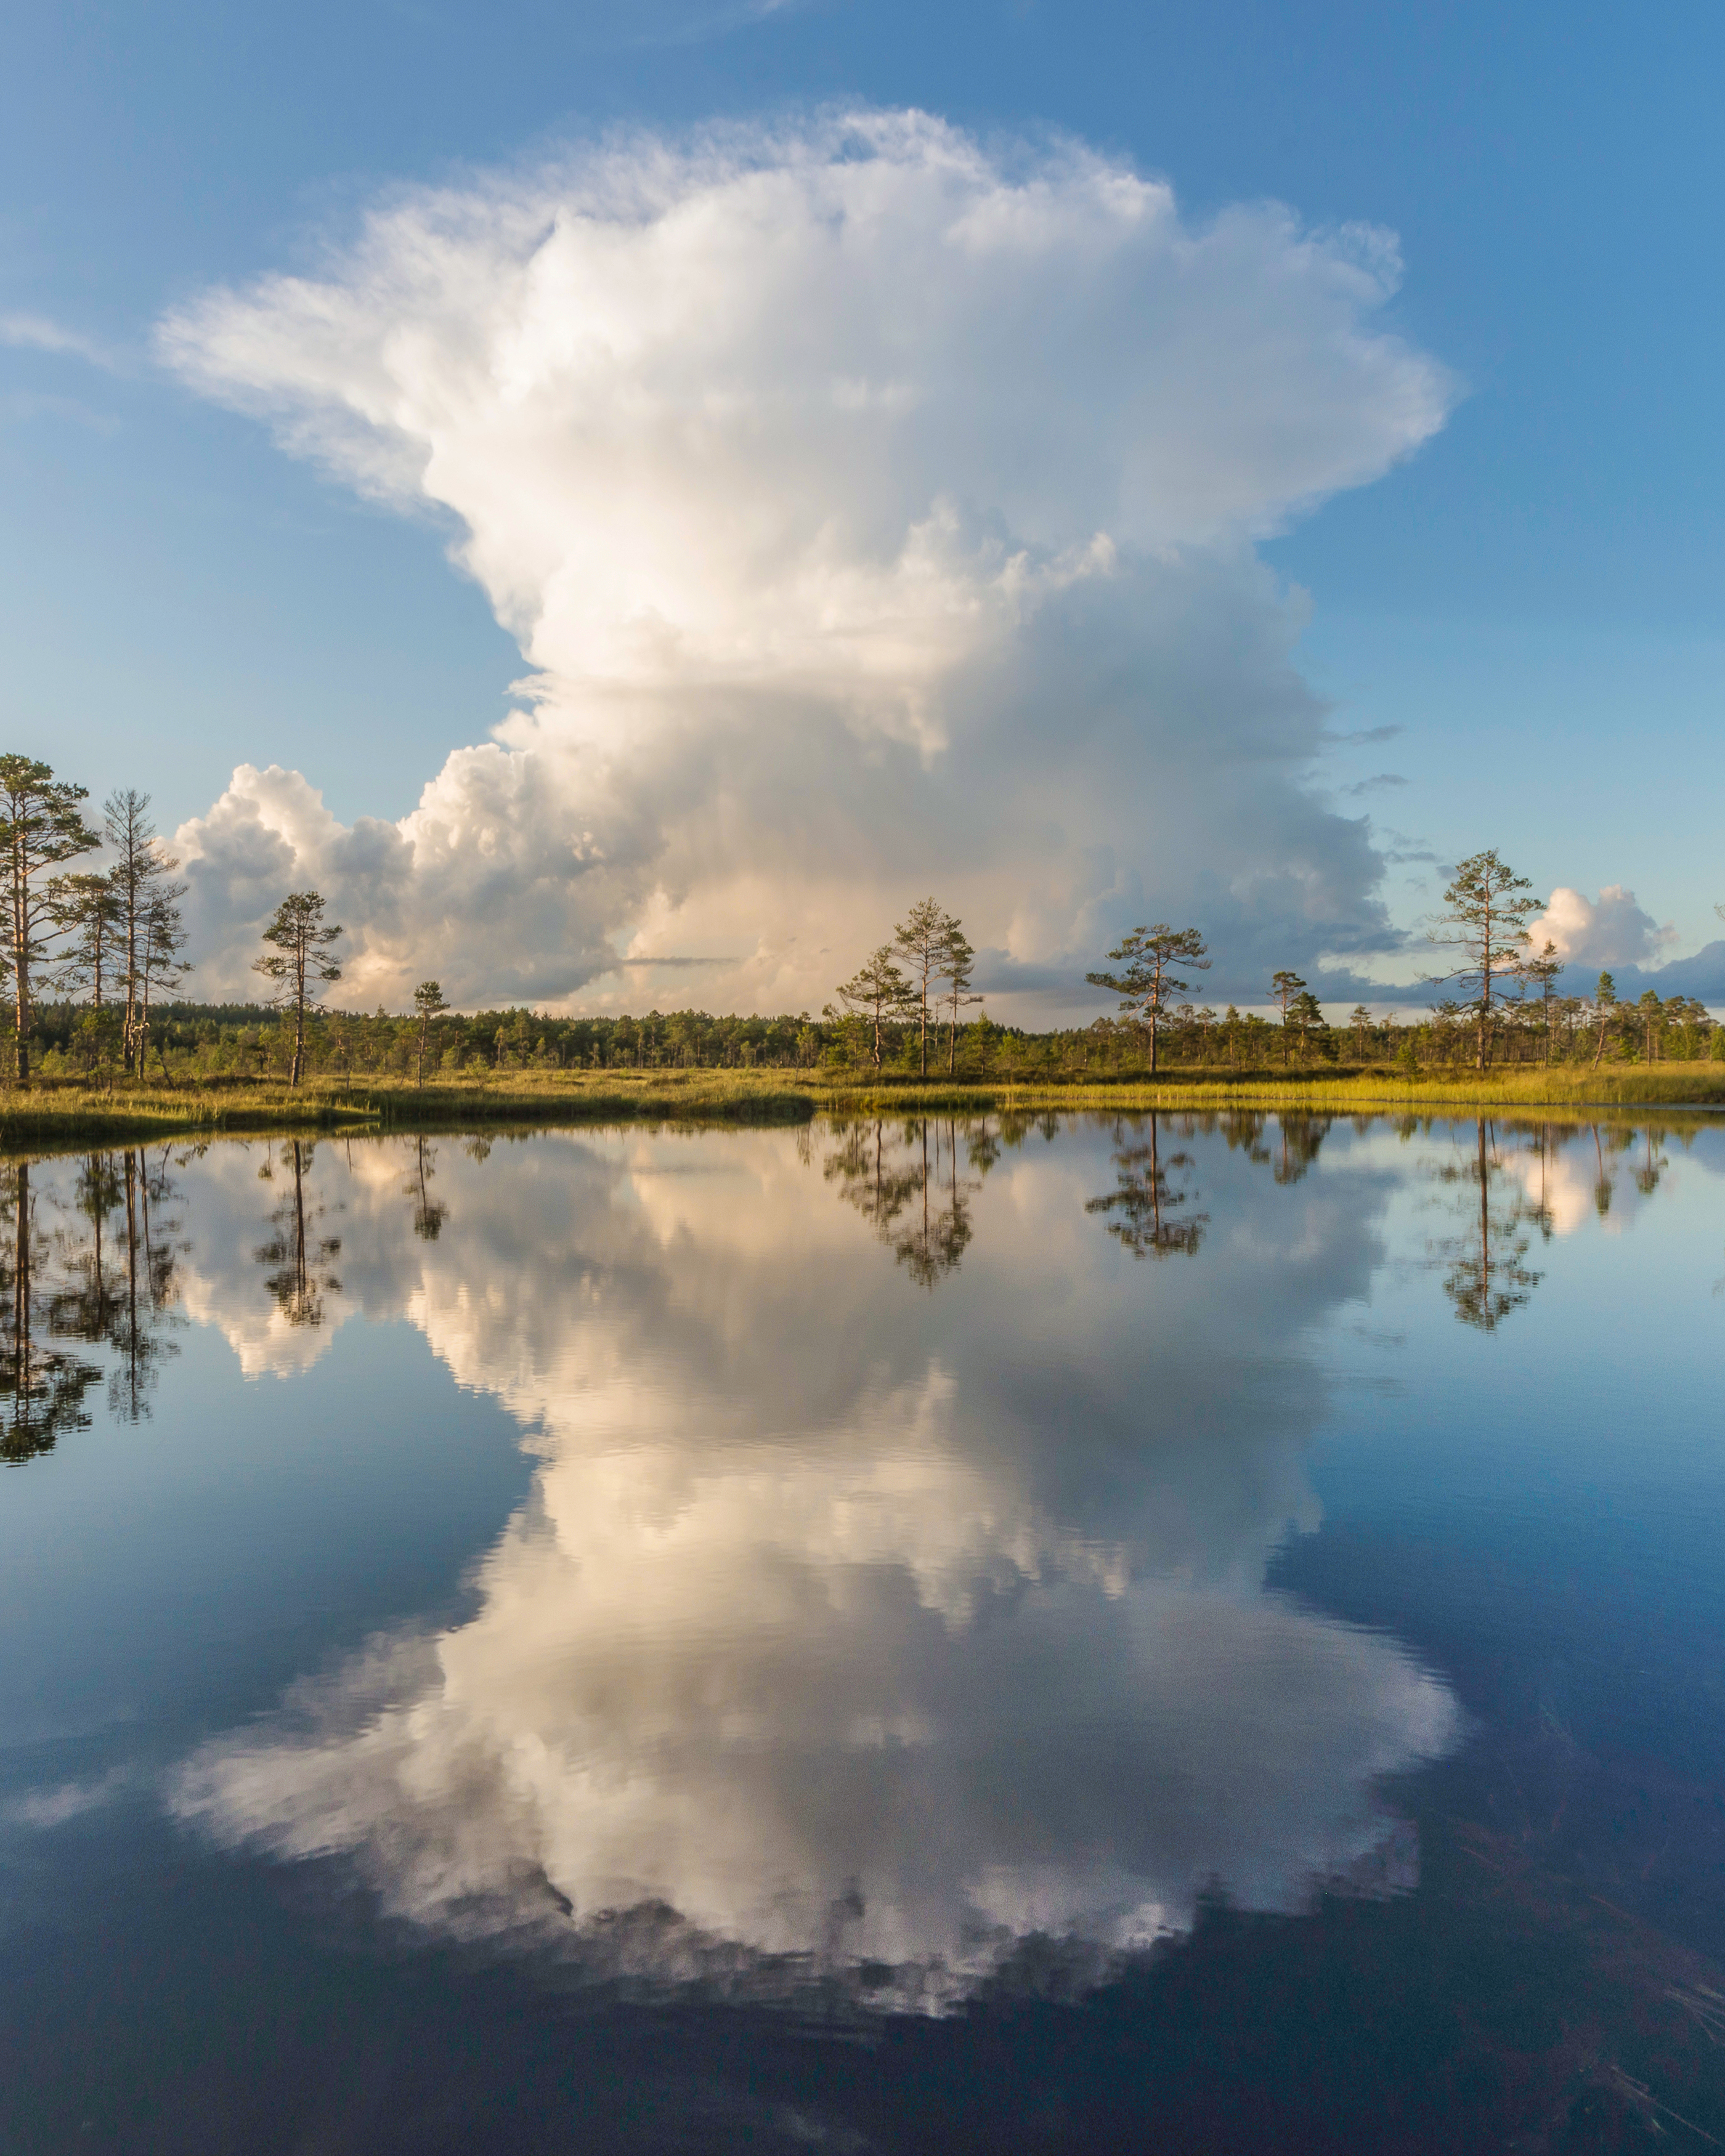 #visitestonia, #visitestland, #ilusadeestipaigad, #nature_of_estonia, #clouds, #cloudscapes, #cloudstagram, #cloudsphotography, #clouds_of_our_world, #reflections, #reflectiongram, #reflecting_perfection, #reflection_focus_on, #visitharju, #pentax, #penta, Nikolai Mordan